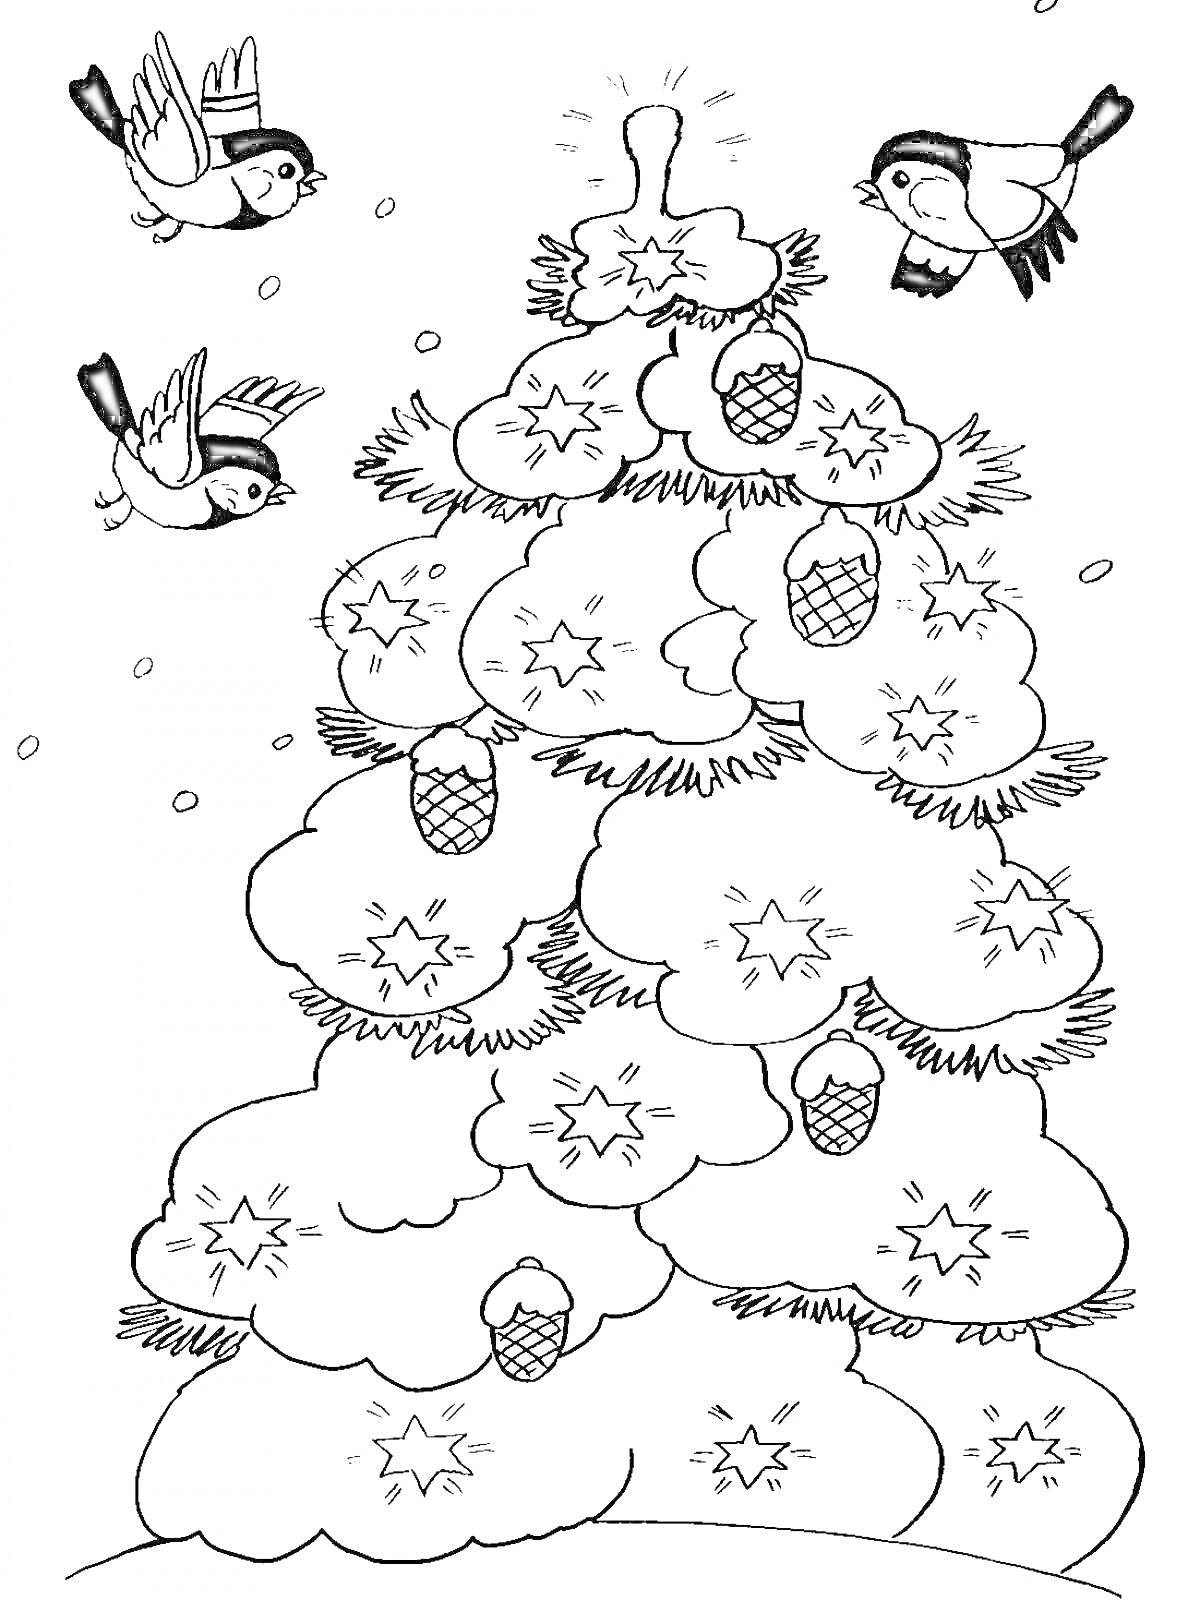 Раскраска Новогодняя ёлка со снежинками, шишками и птицами